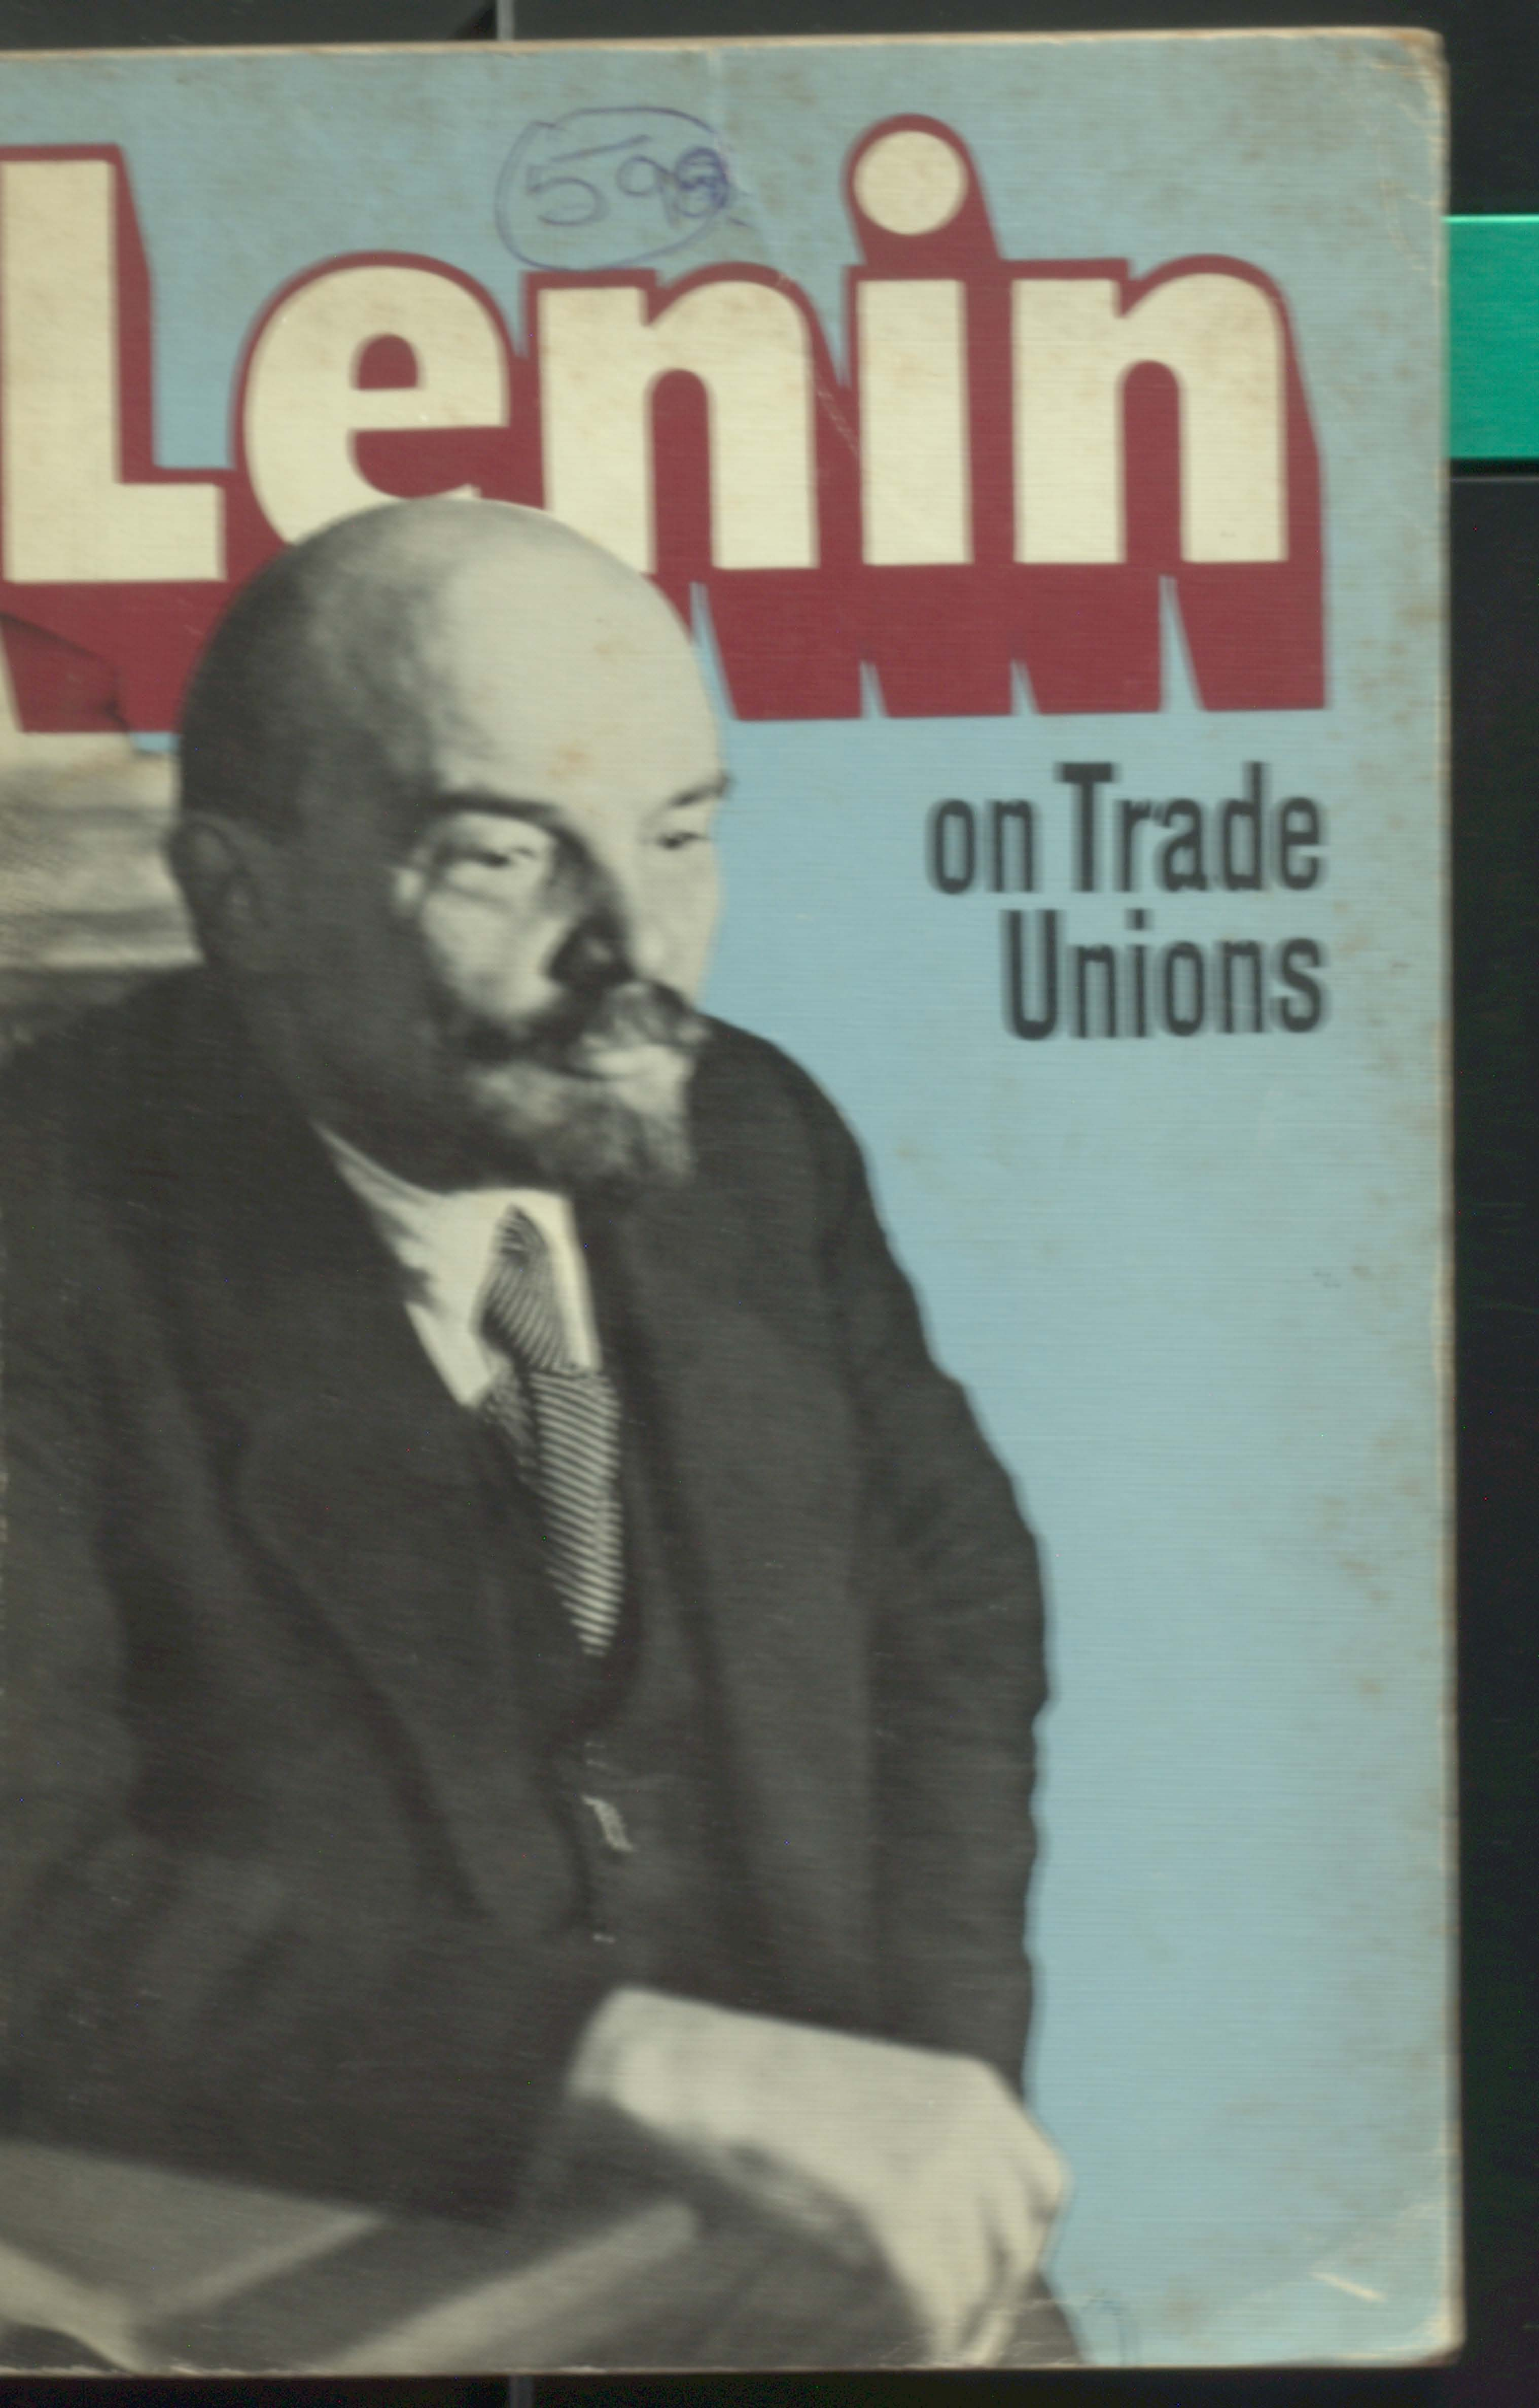 Lenin on Trade Unions